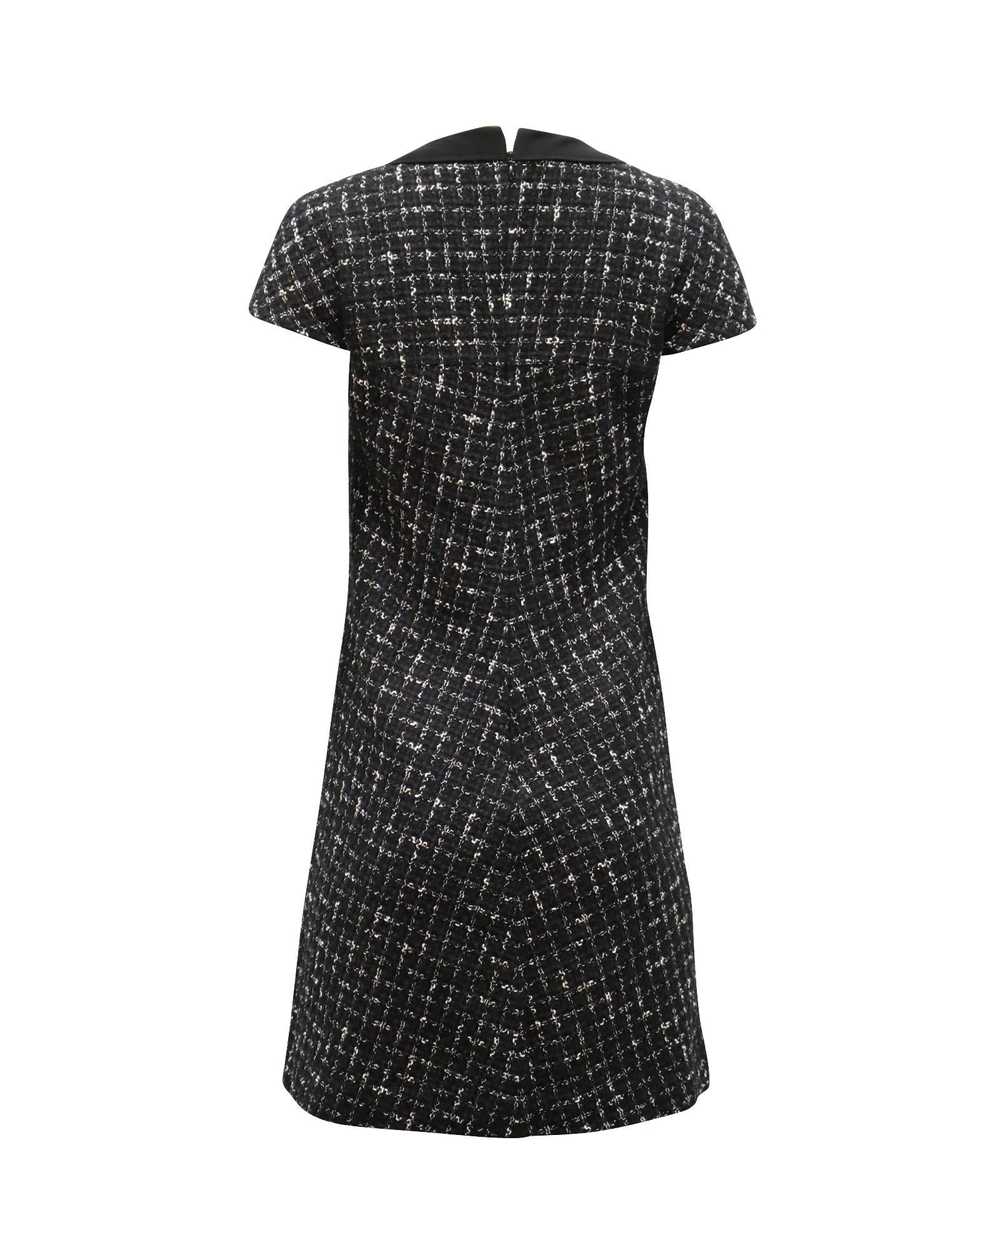 Balenciaga Black Cotton Tweed Shift Dress - image 2